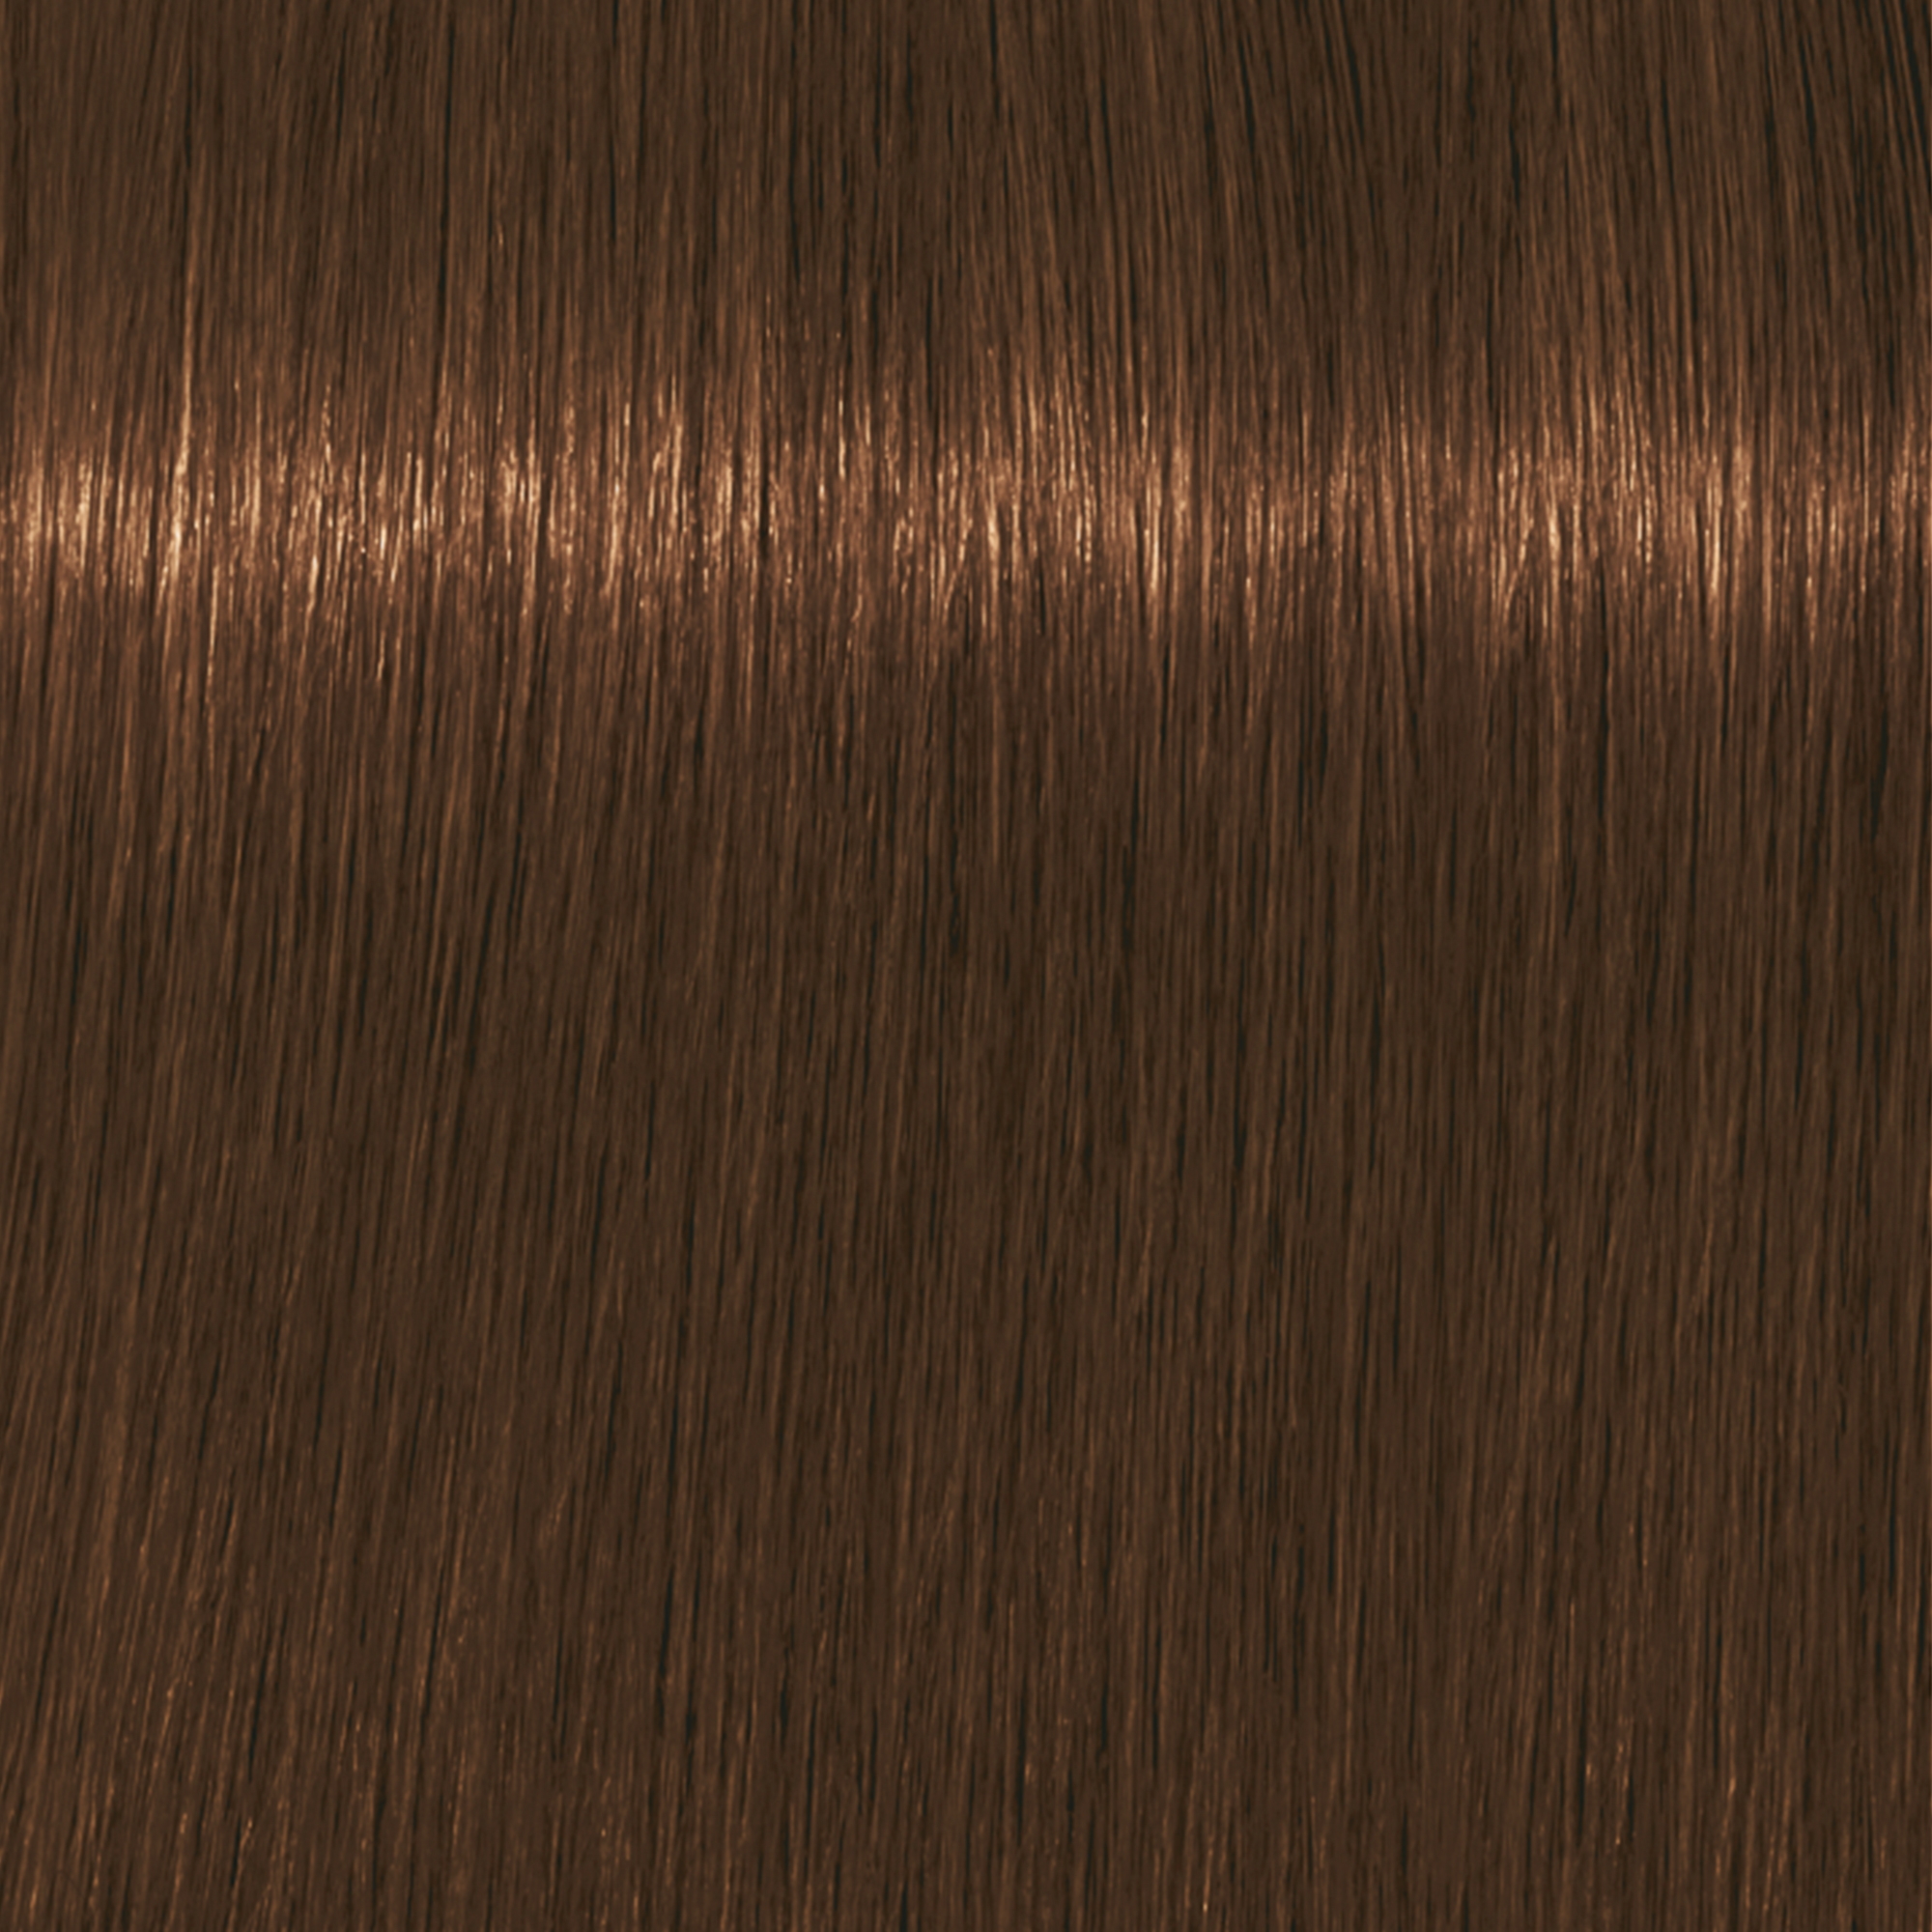 Schwarzkopf Igora Royal Absolute 7-60 - Tubo natural color rubio medio  chocolate para el cabello, 2.0 fl oz, tubo por Ignora Royal